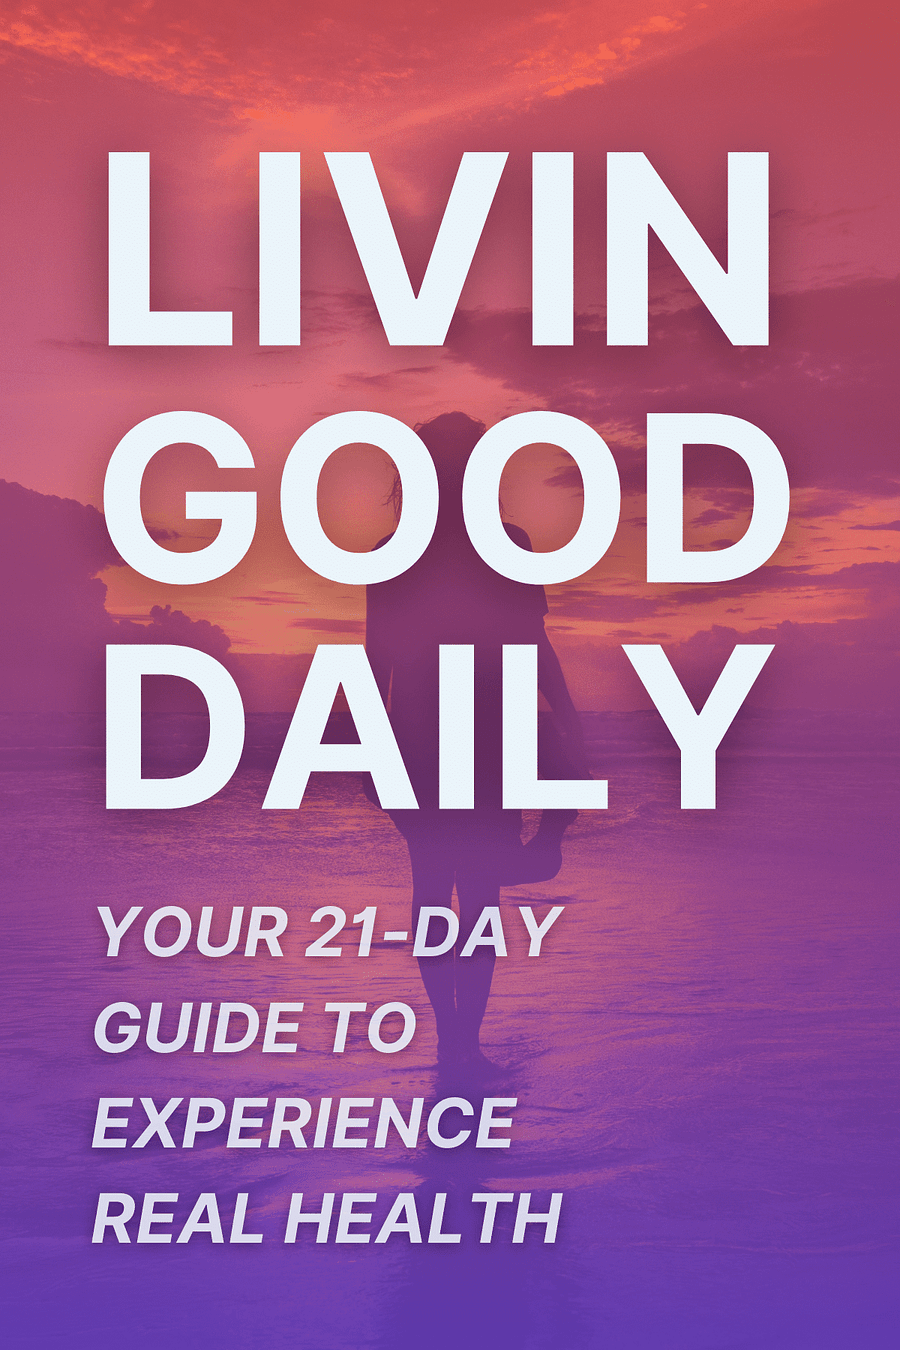 Livingood Daily by Dr. Livingood - Book Summary